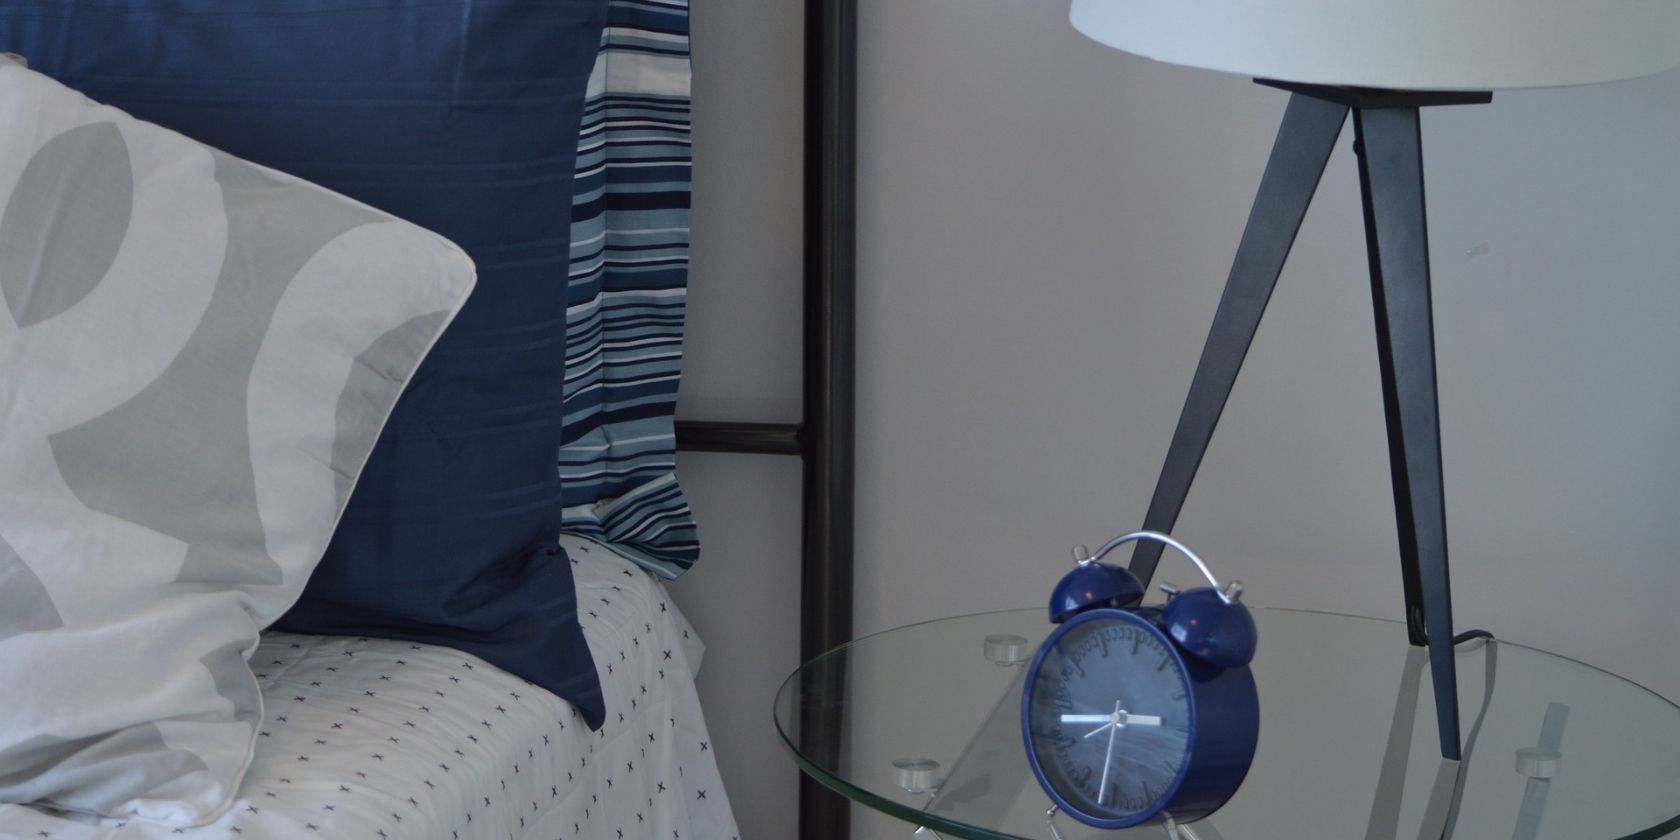 Alarm clock on a bedside table